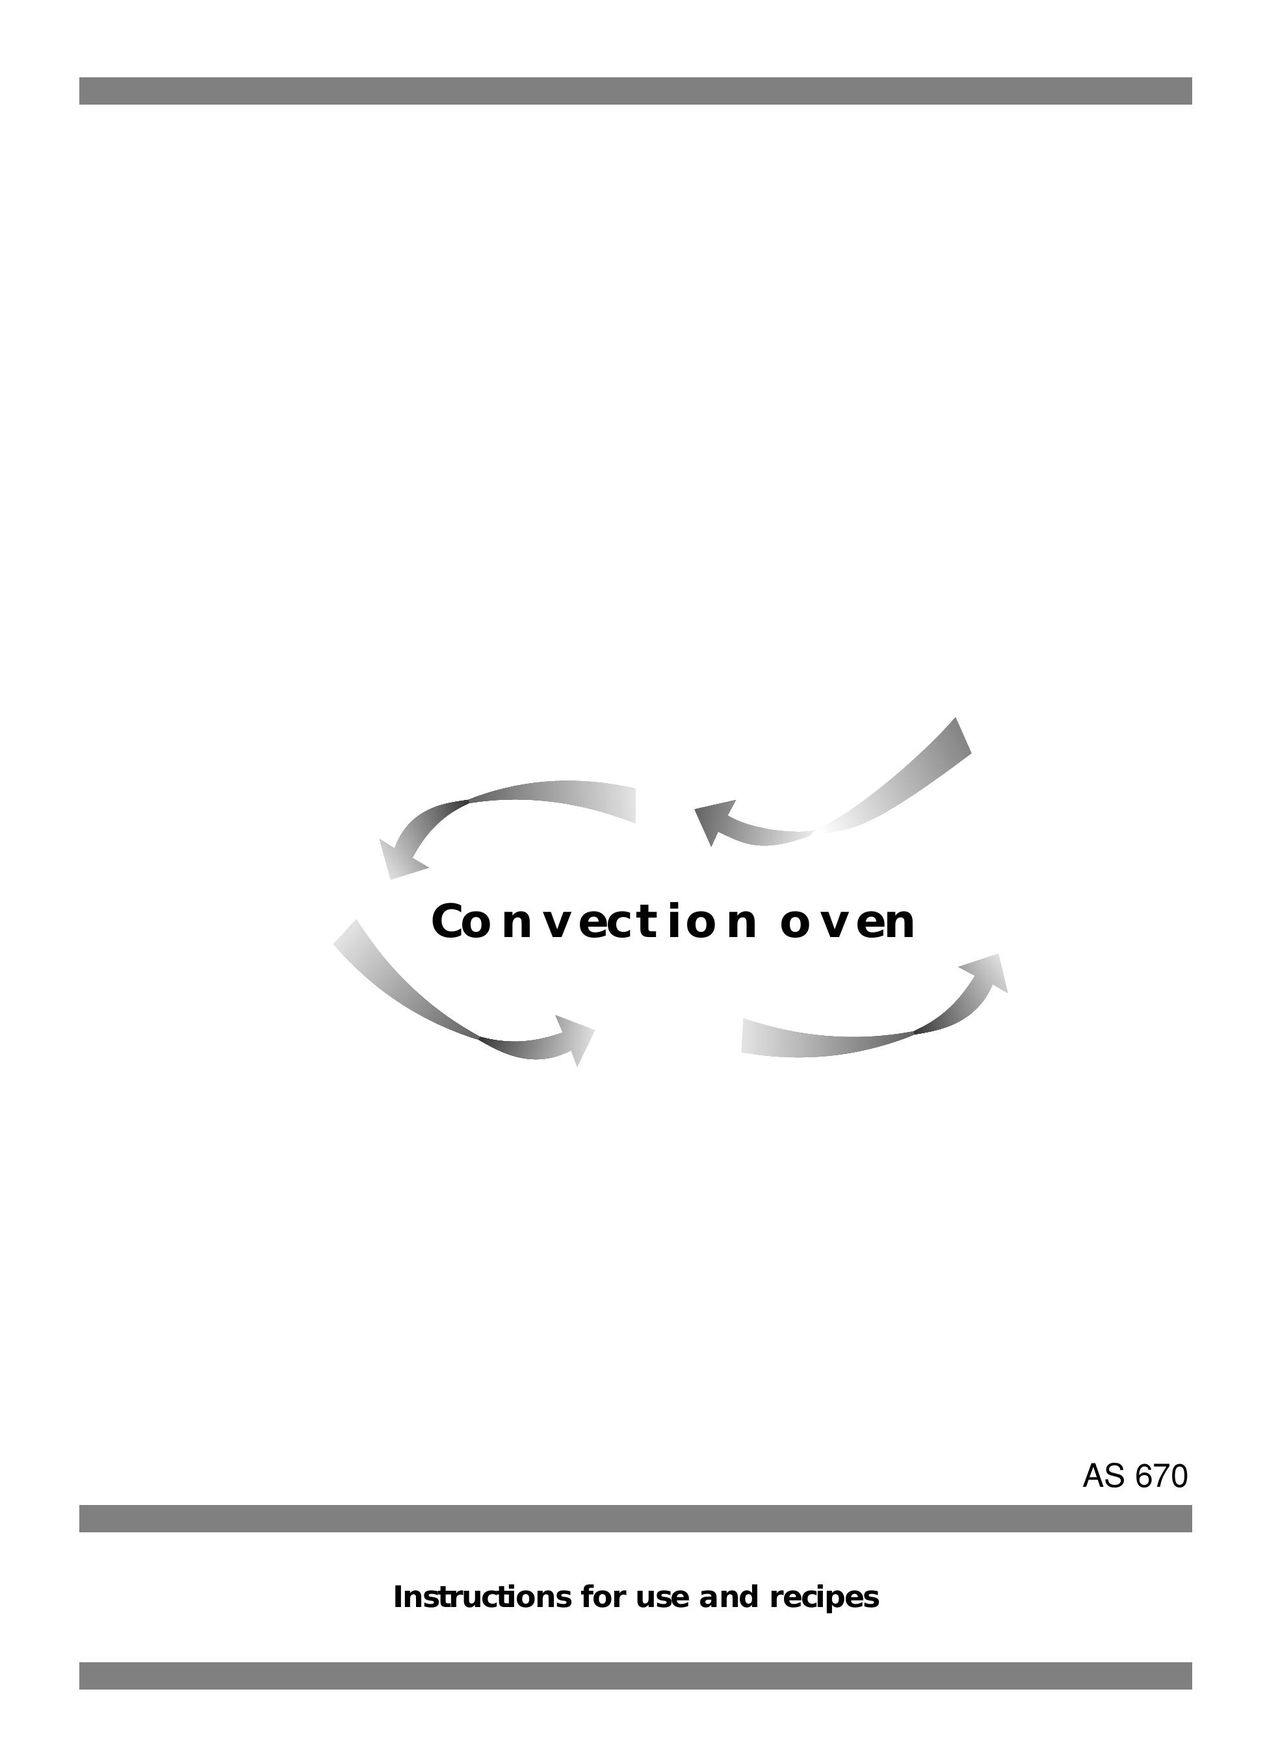 DeLonghi AS 670 Convection Oven User Manual